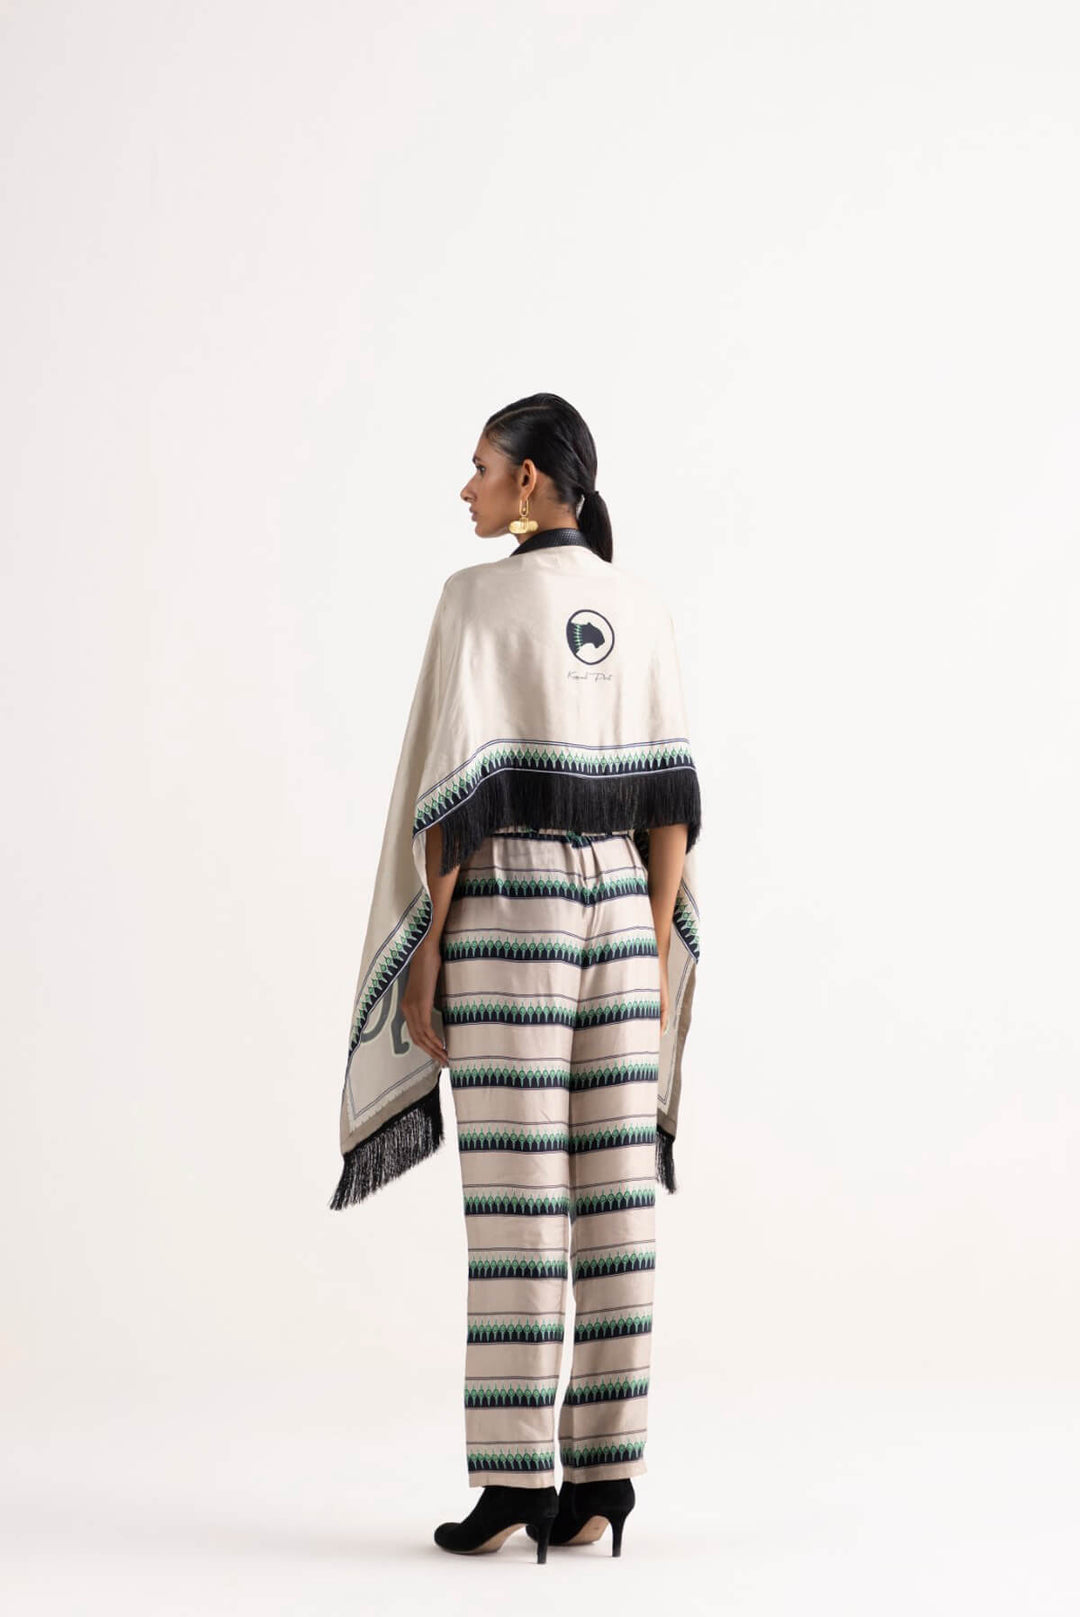 Niara statement deep-neck, shawl overlay with striped pants